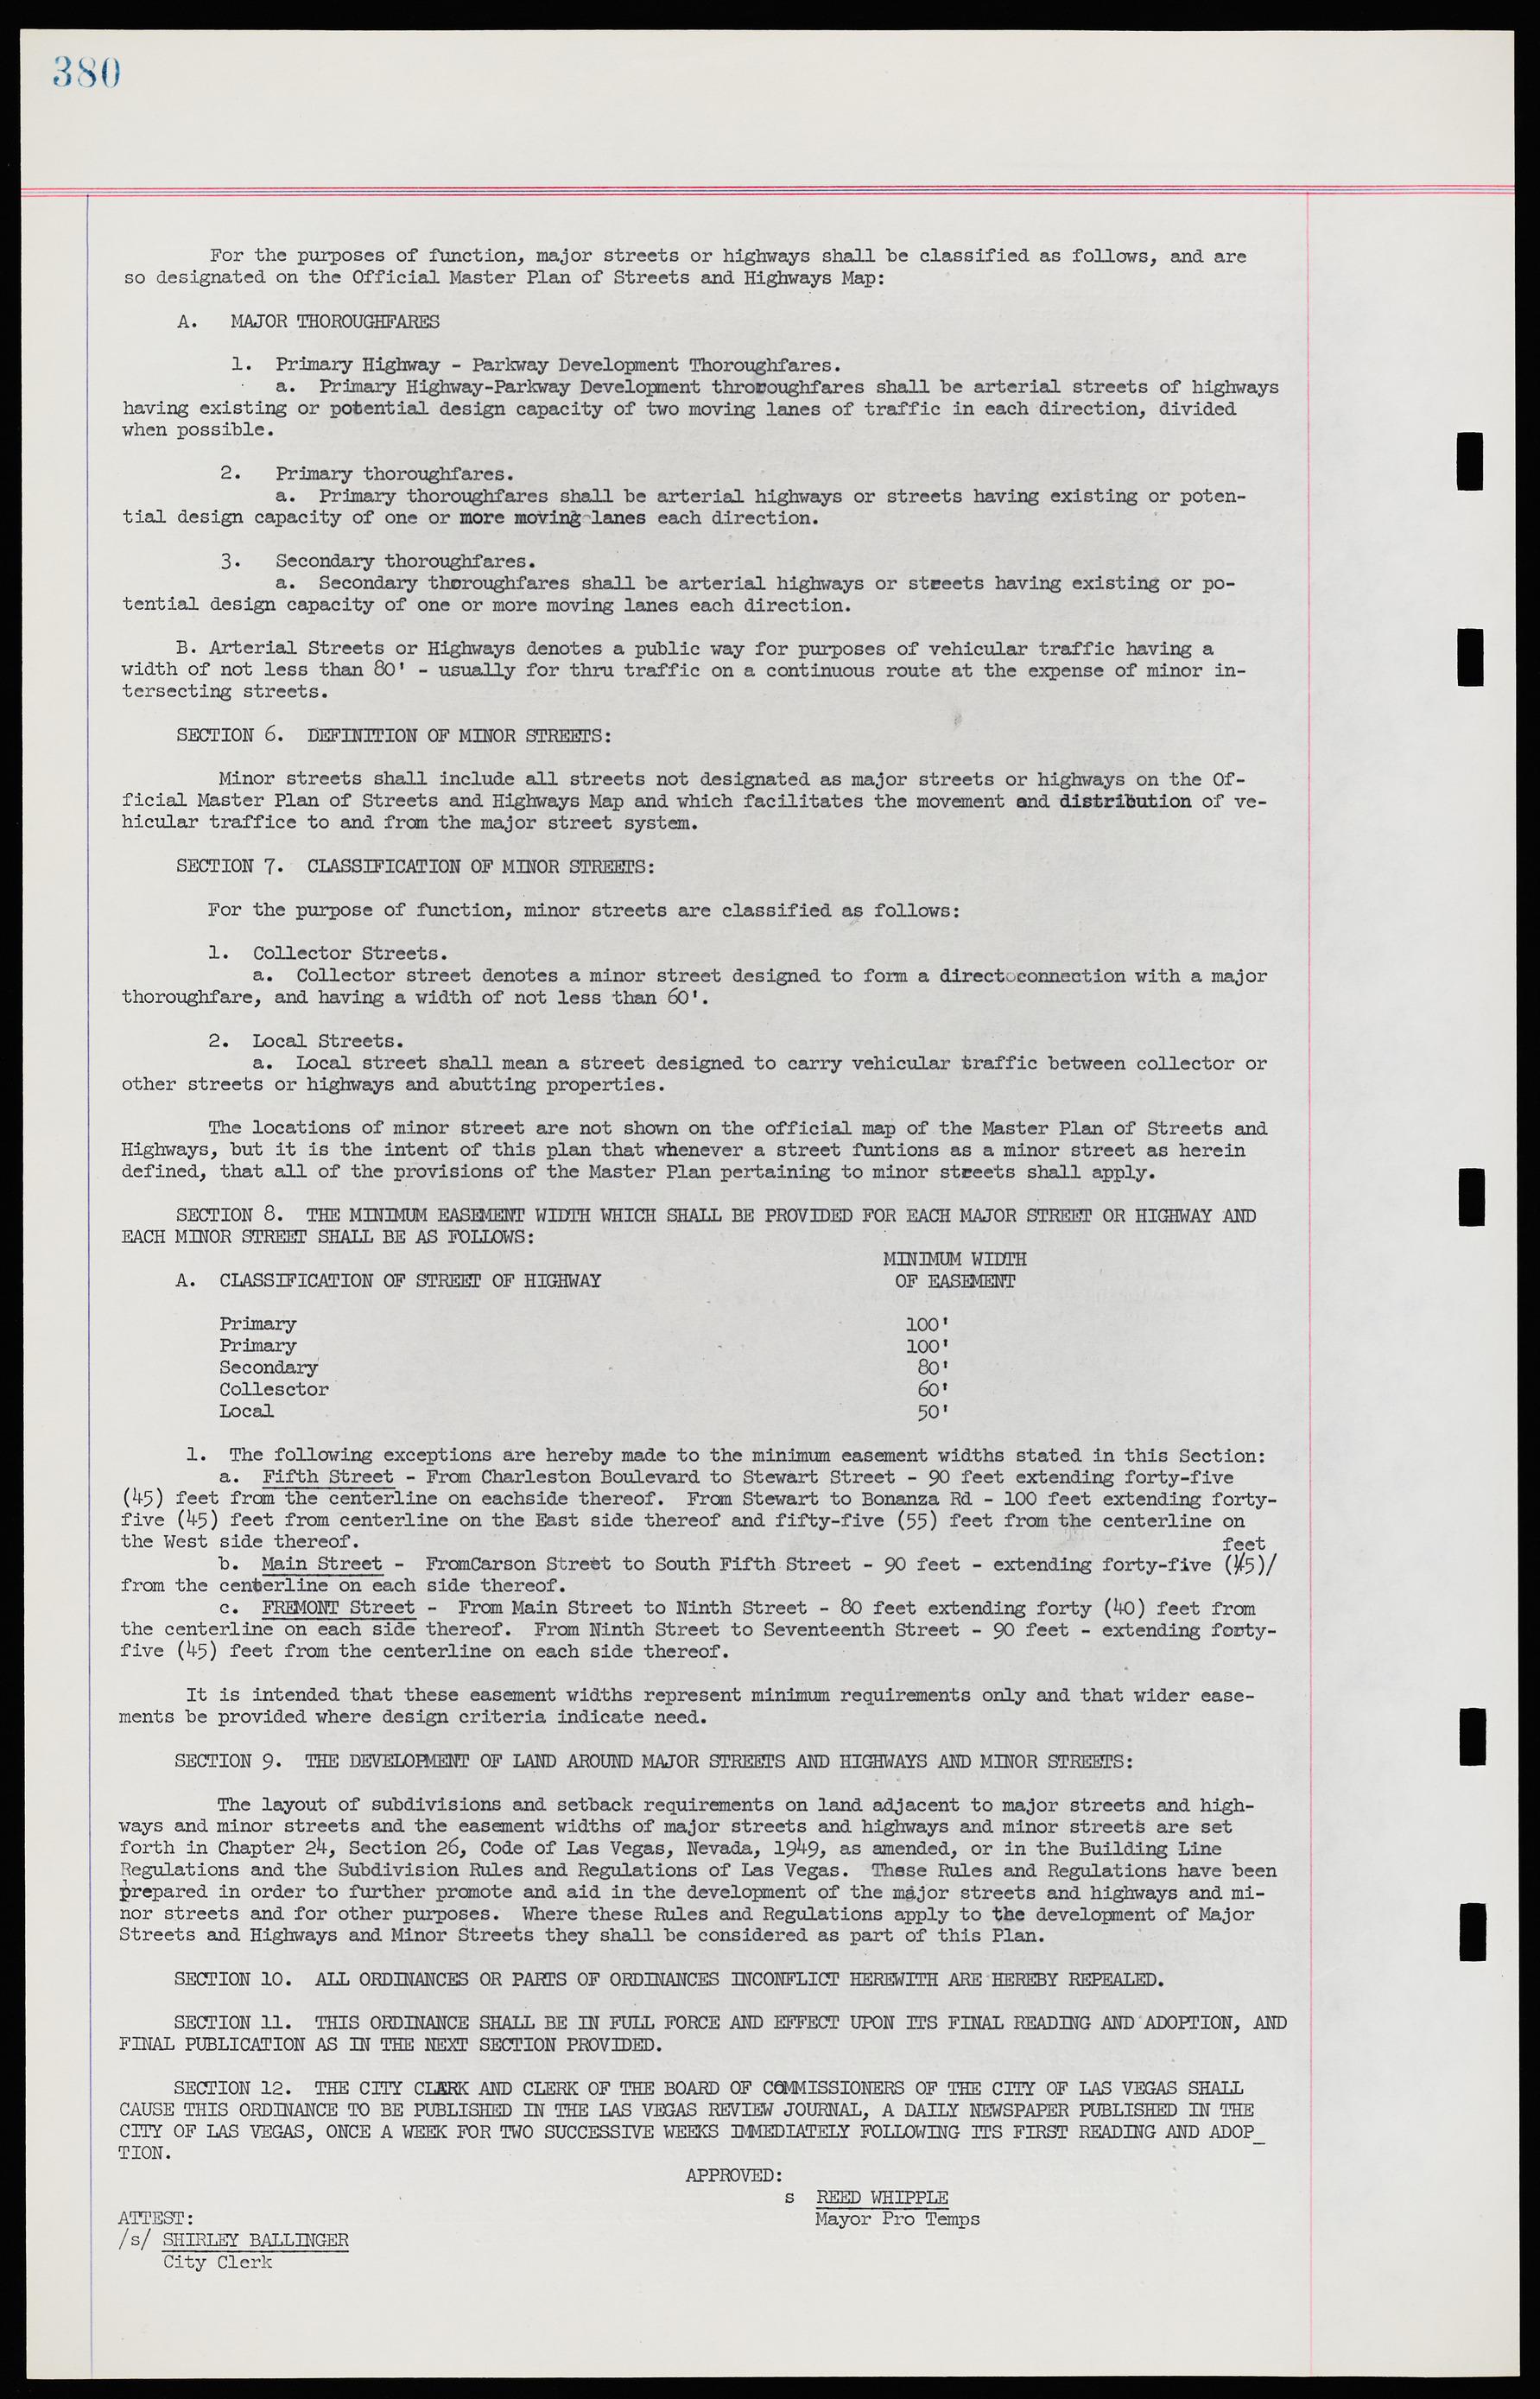 Las Vegas City Ordinances, November 13, 1950 to August 6, 1958, lvc000015-388